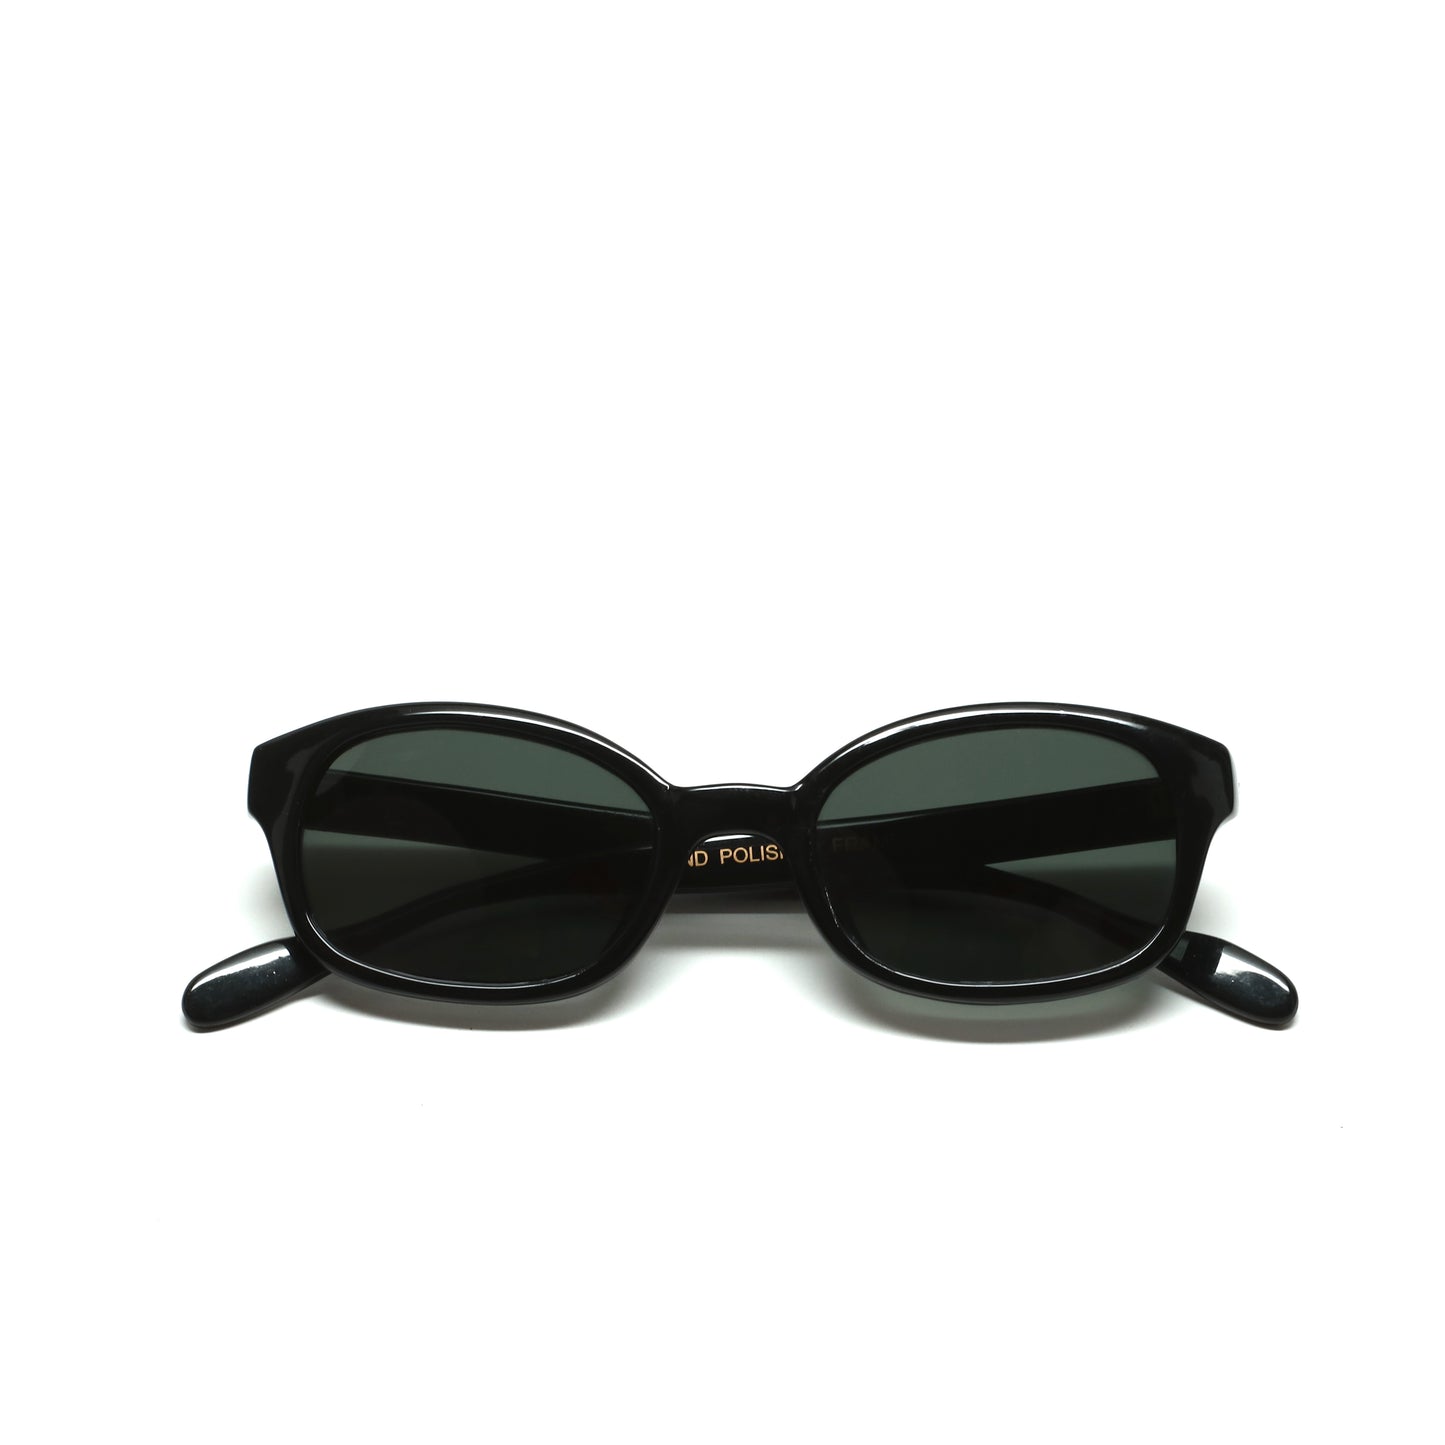 Vintage Small Sized 90s Mod Original Rectangle Sunglasses - Black